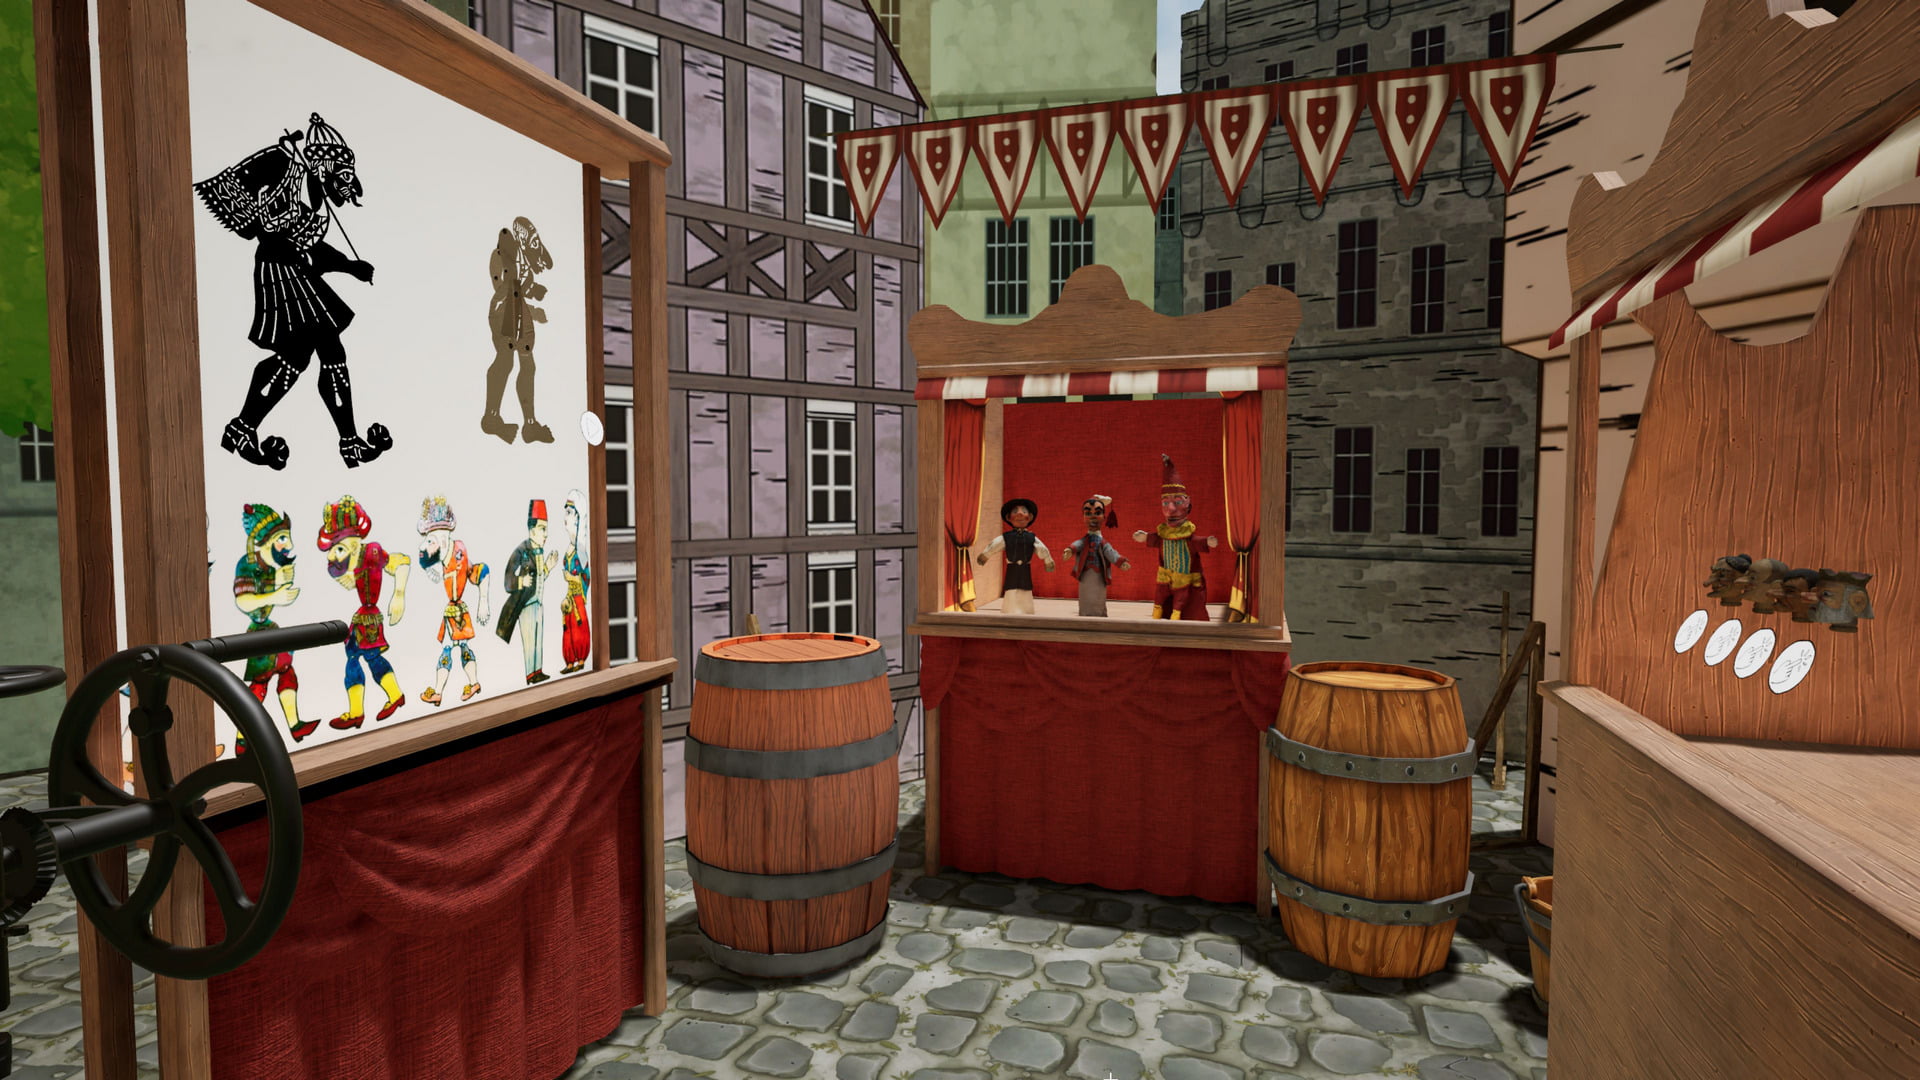 Großes Theater: „Puppets 4.0“ entführt ins VR Figurentheater